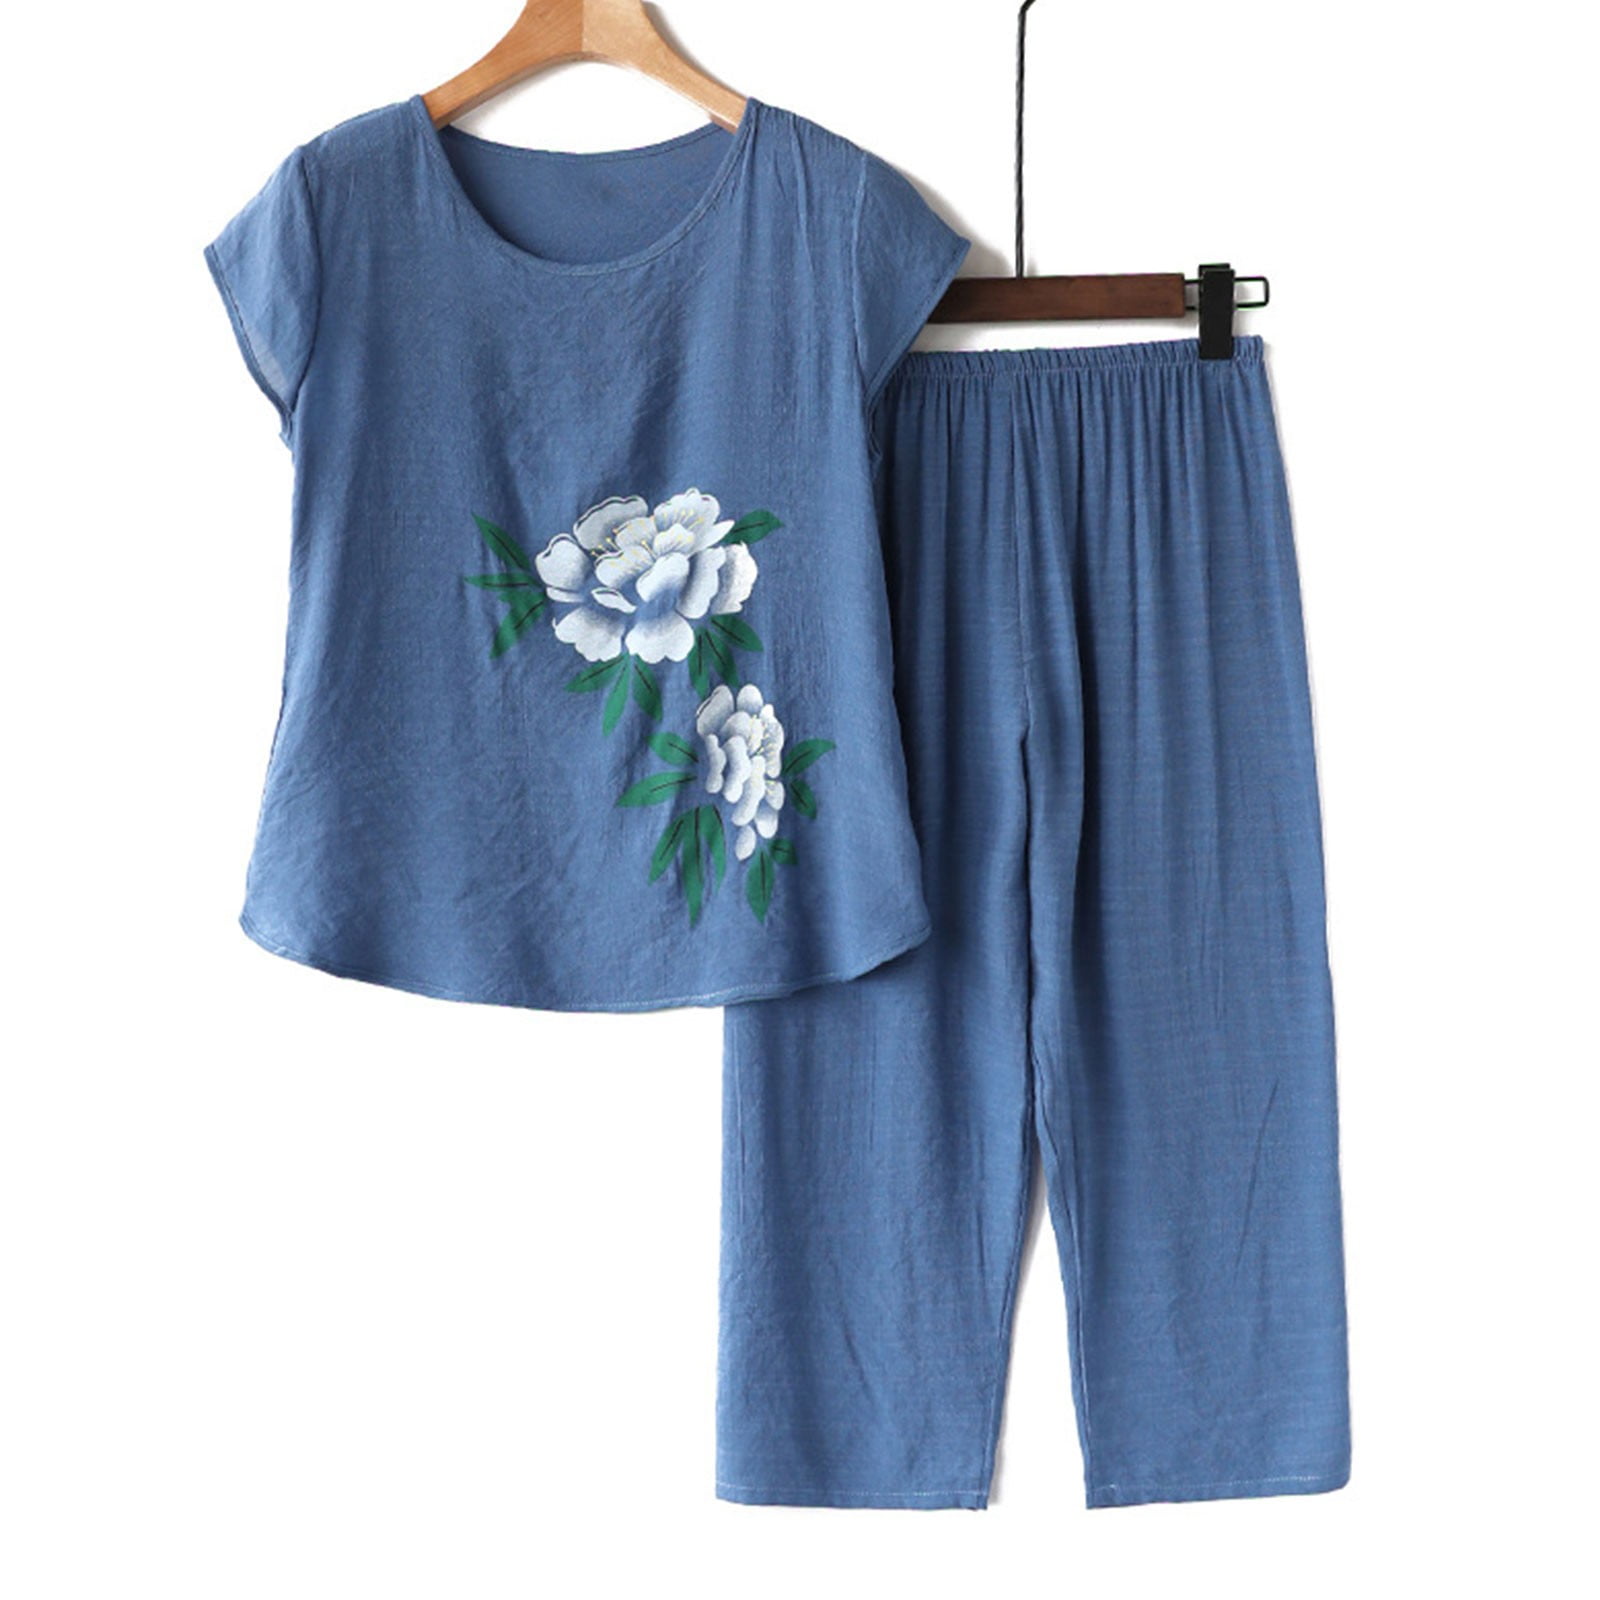 Xysaqa Women's Pajama Set Cotton Short Sleeve Shirt and Capris Pants ...